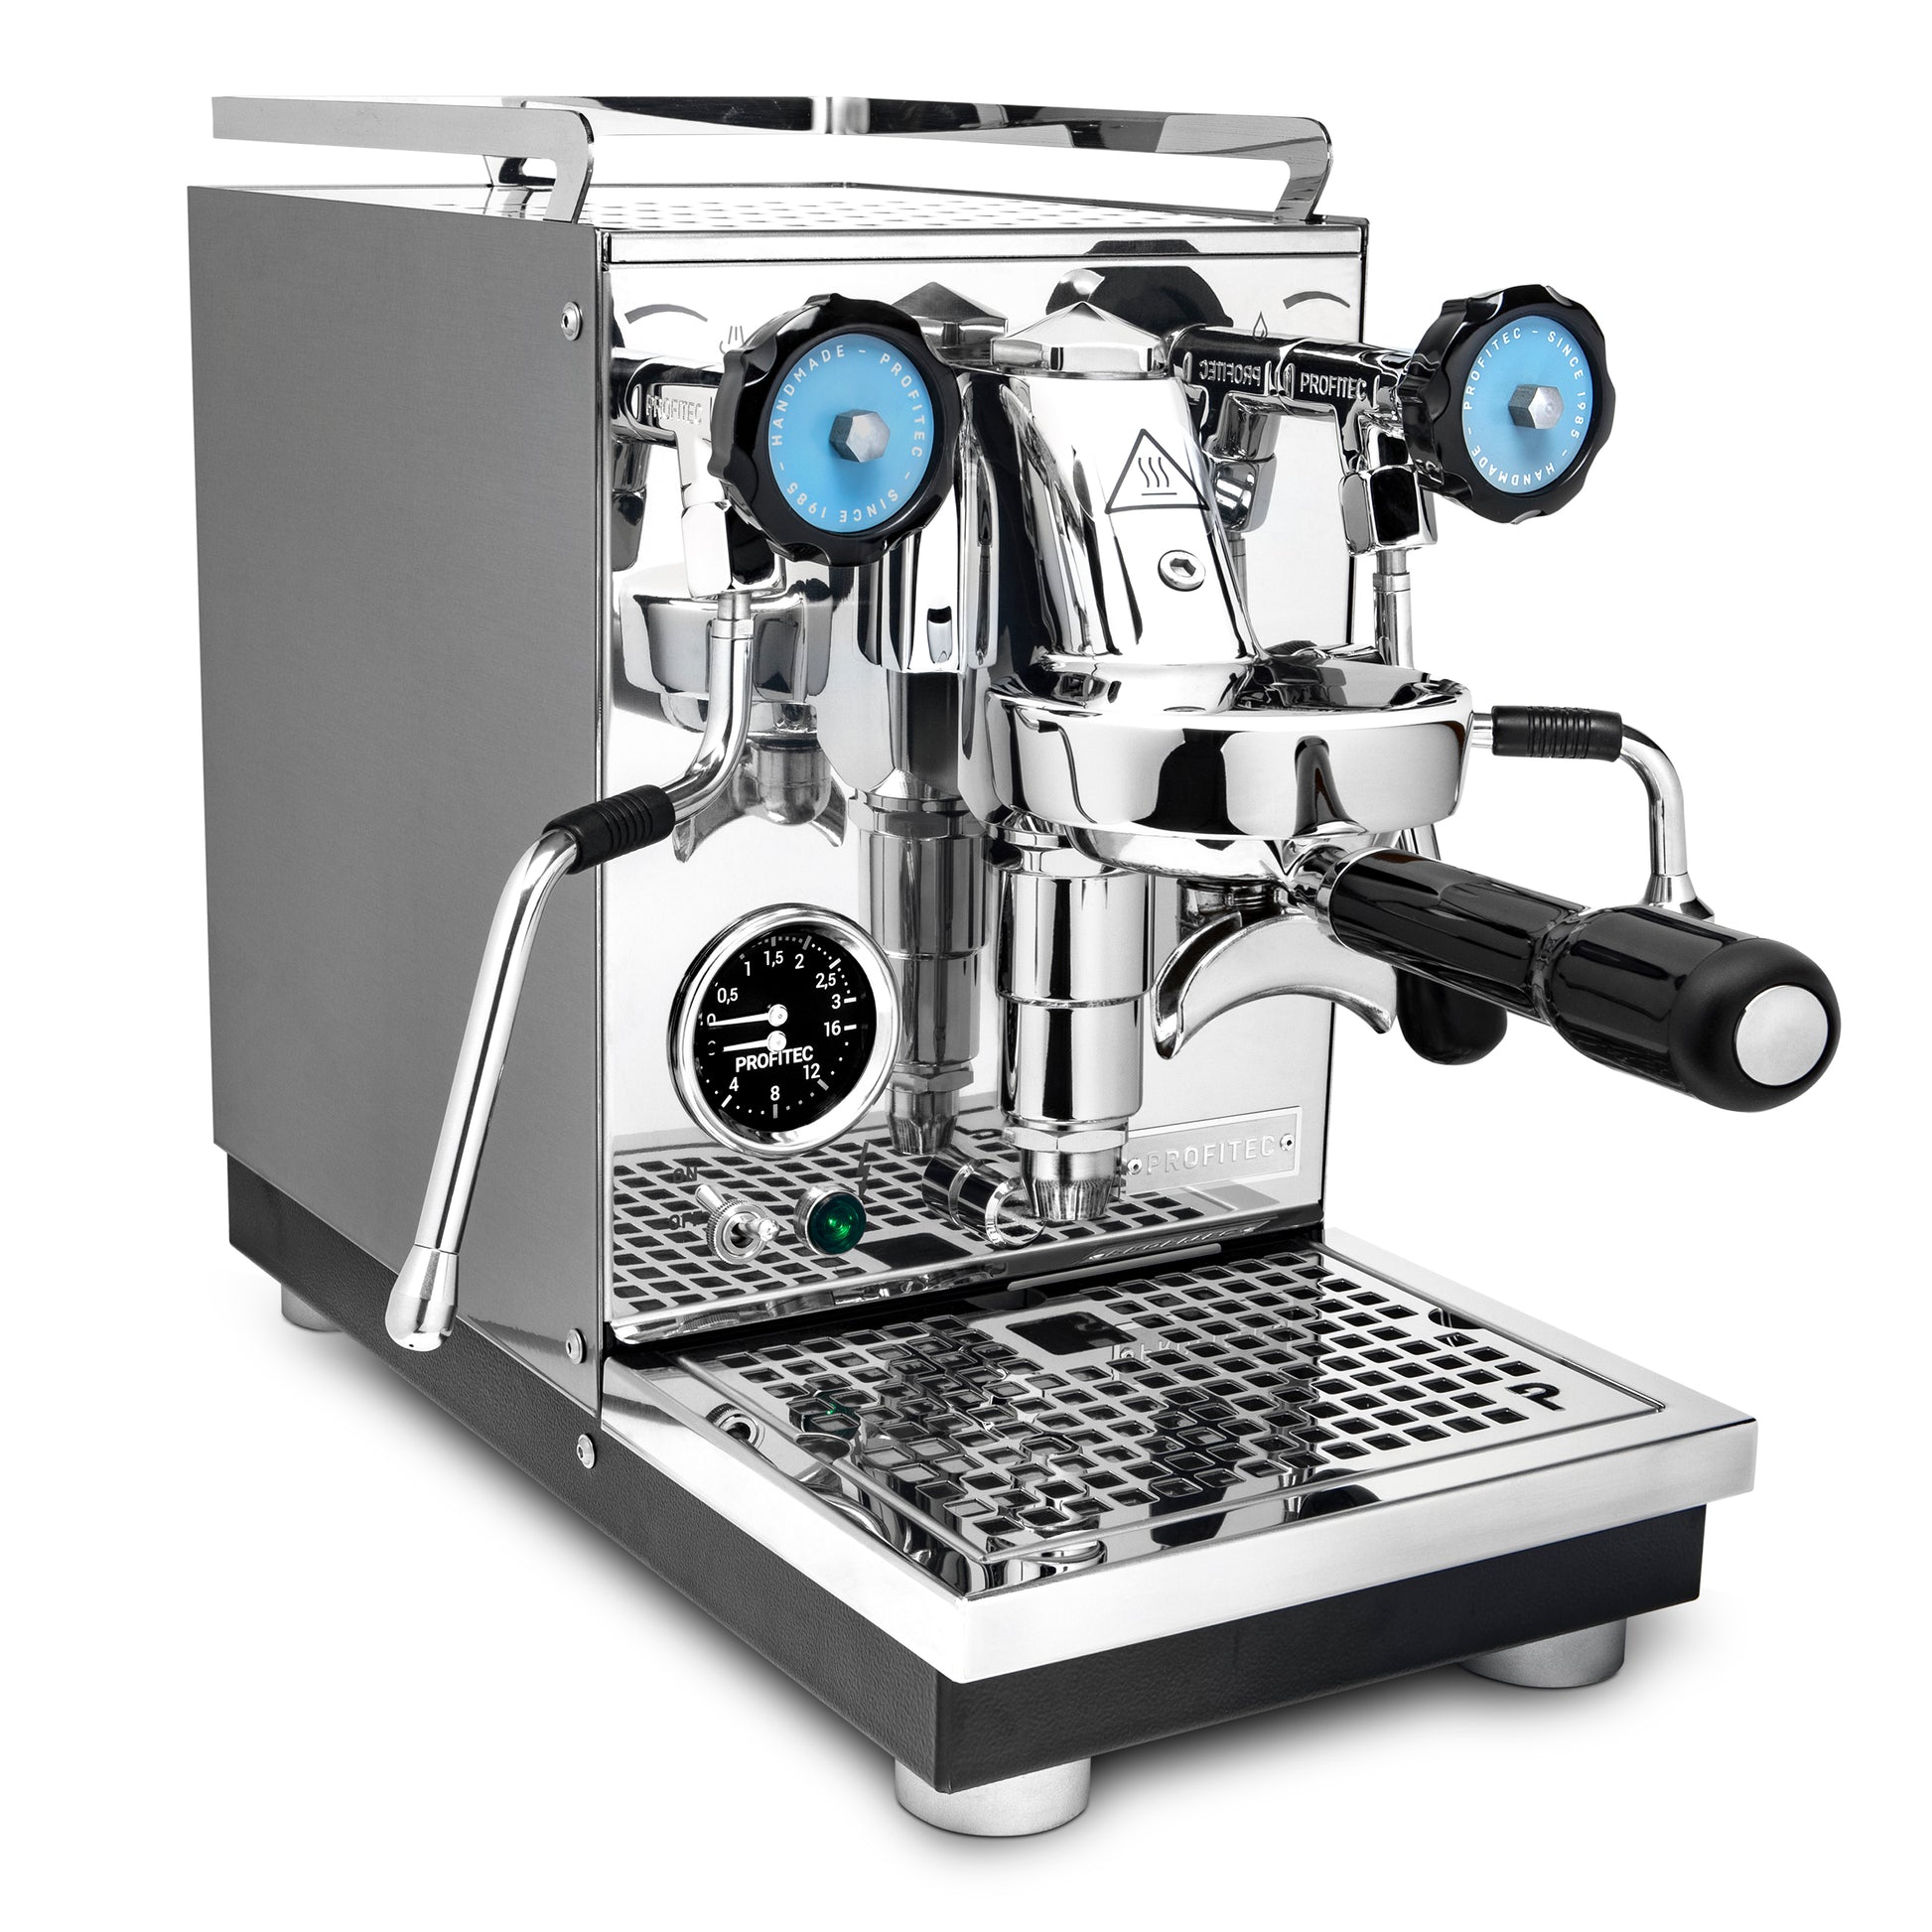 Wirsh espresso machine: an impressive model for just $150